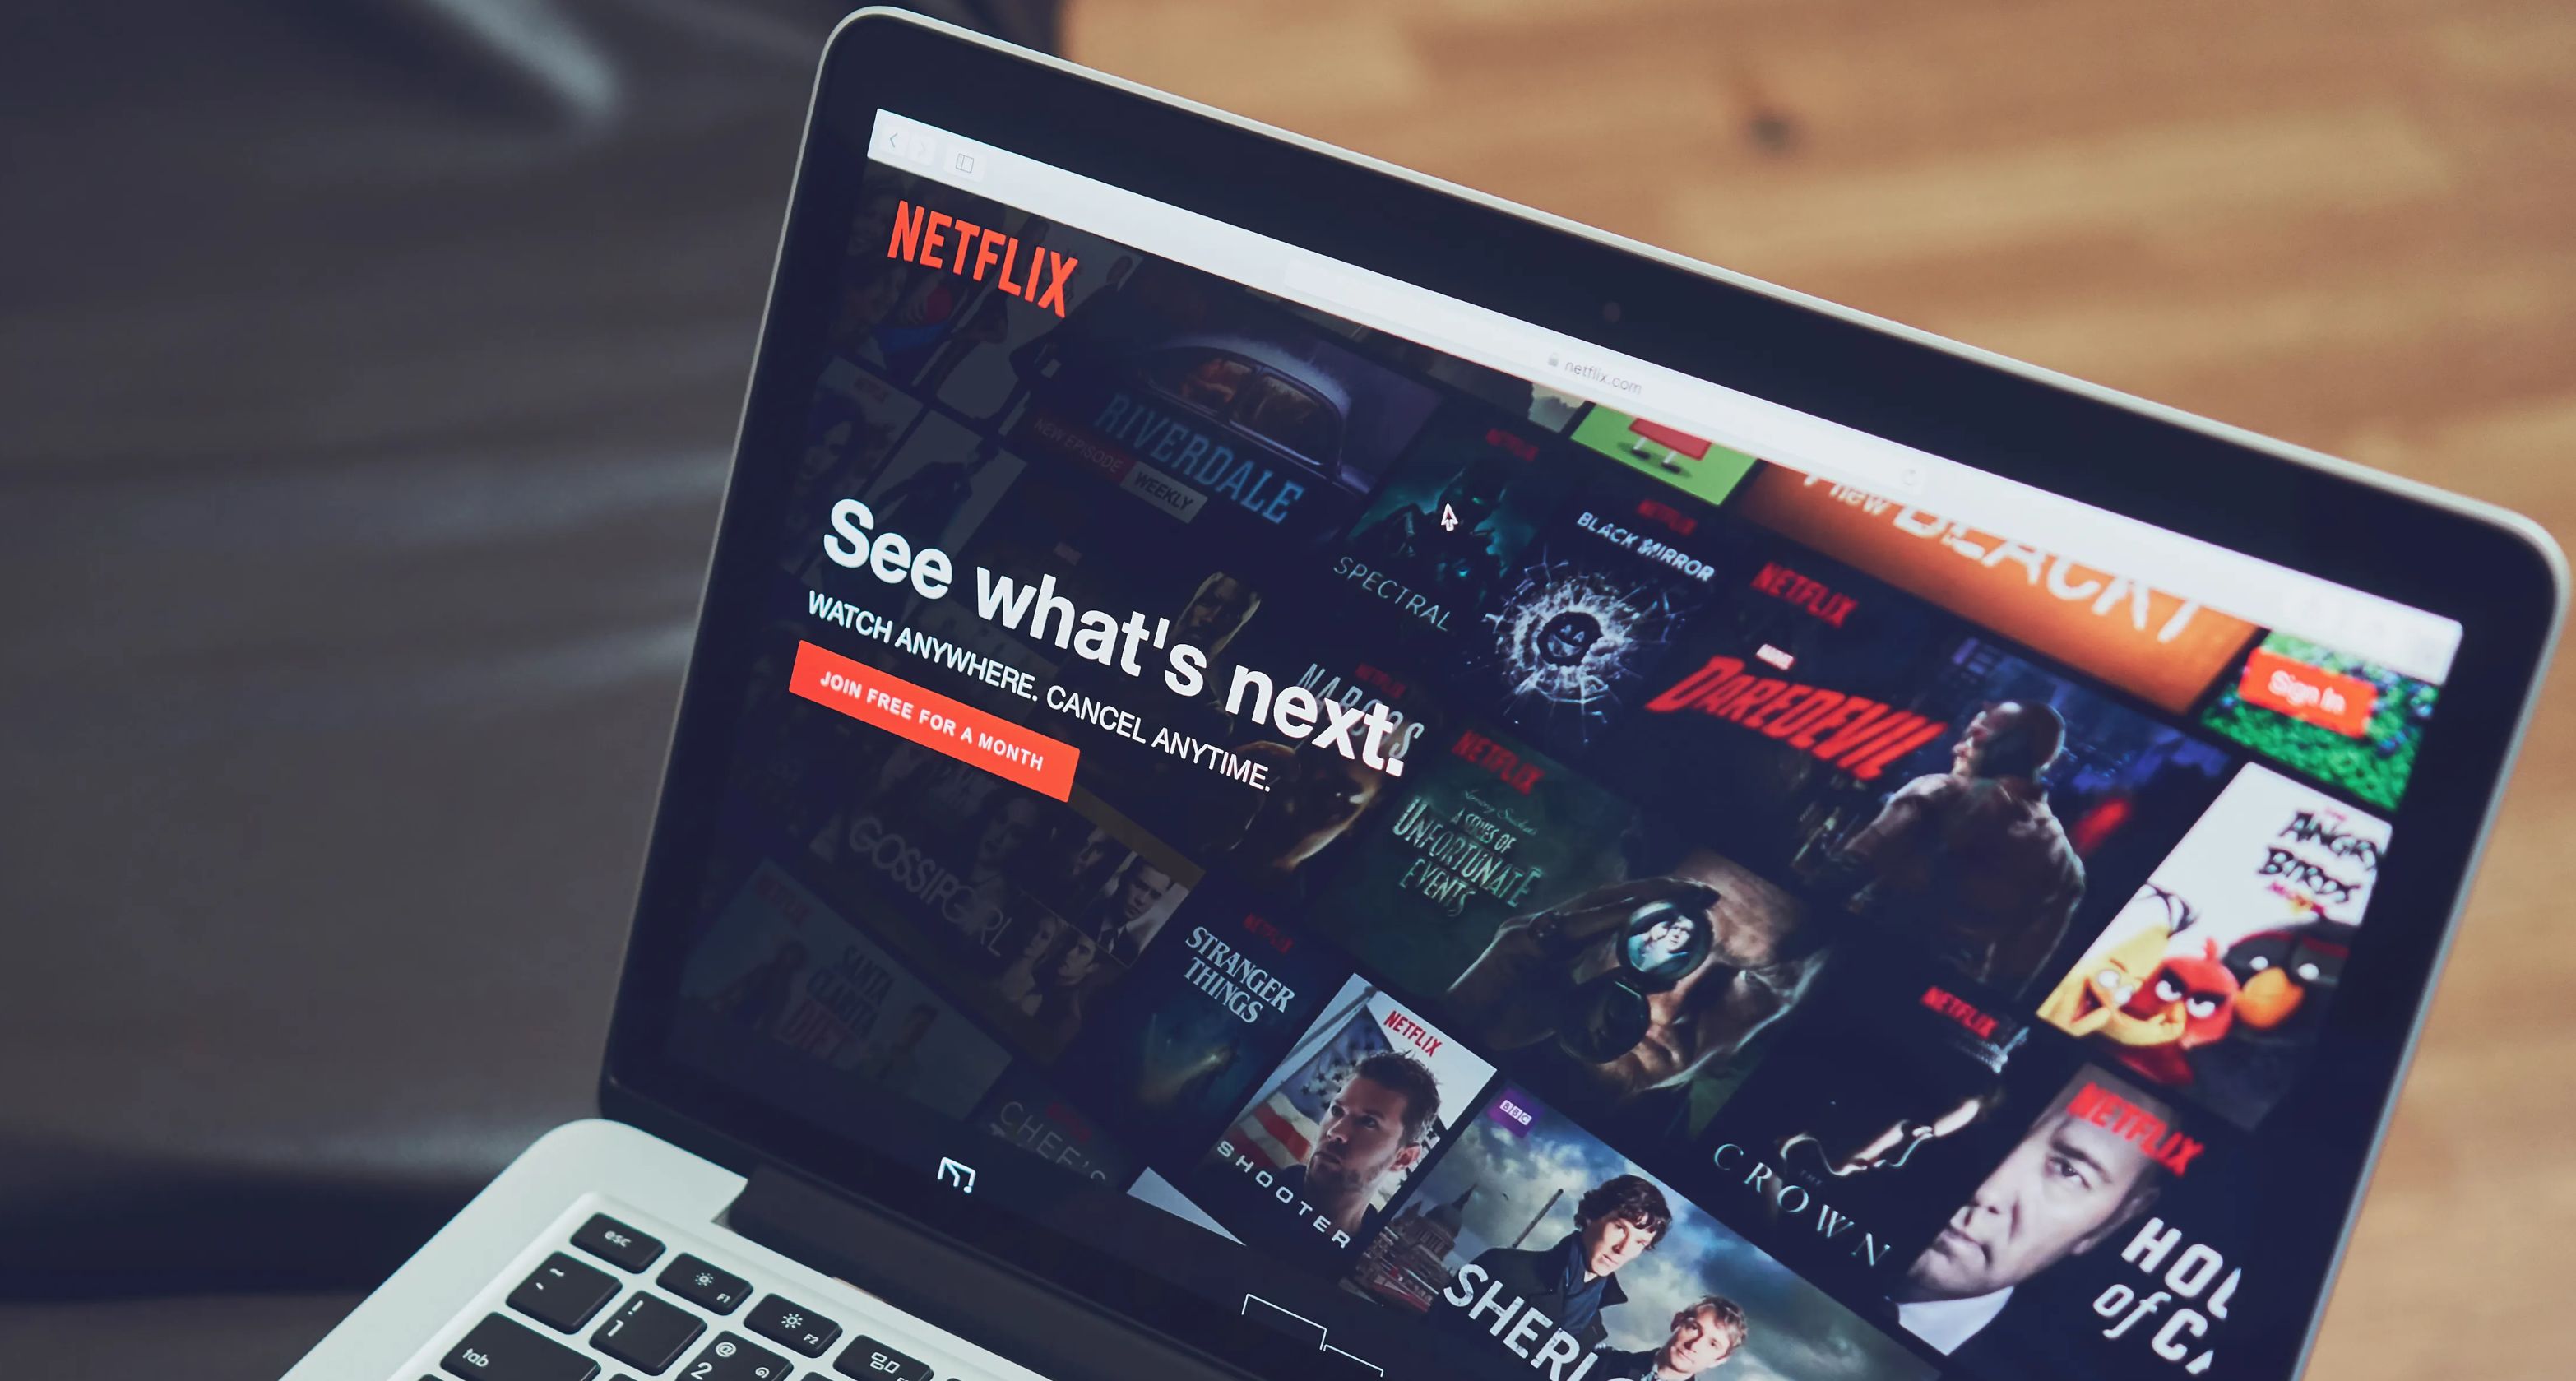 The Netflix app is seen on a laptop screen.